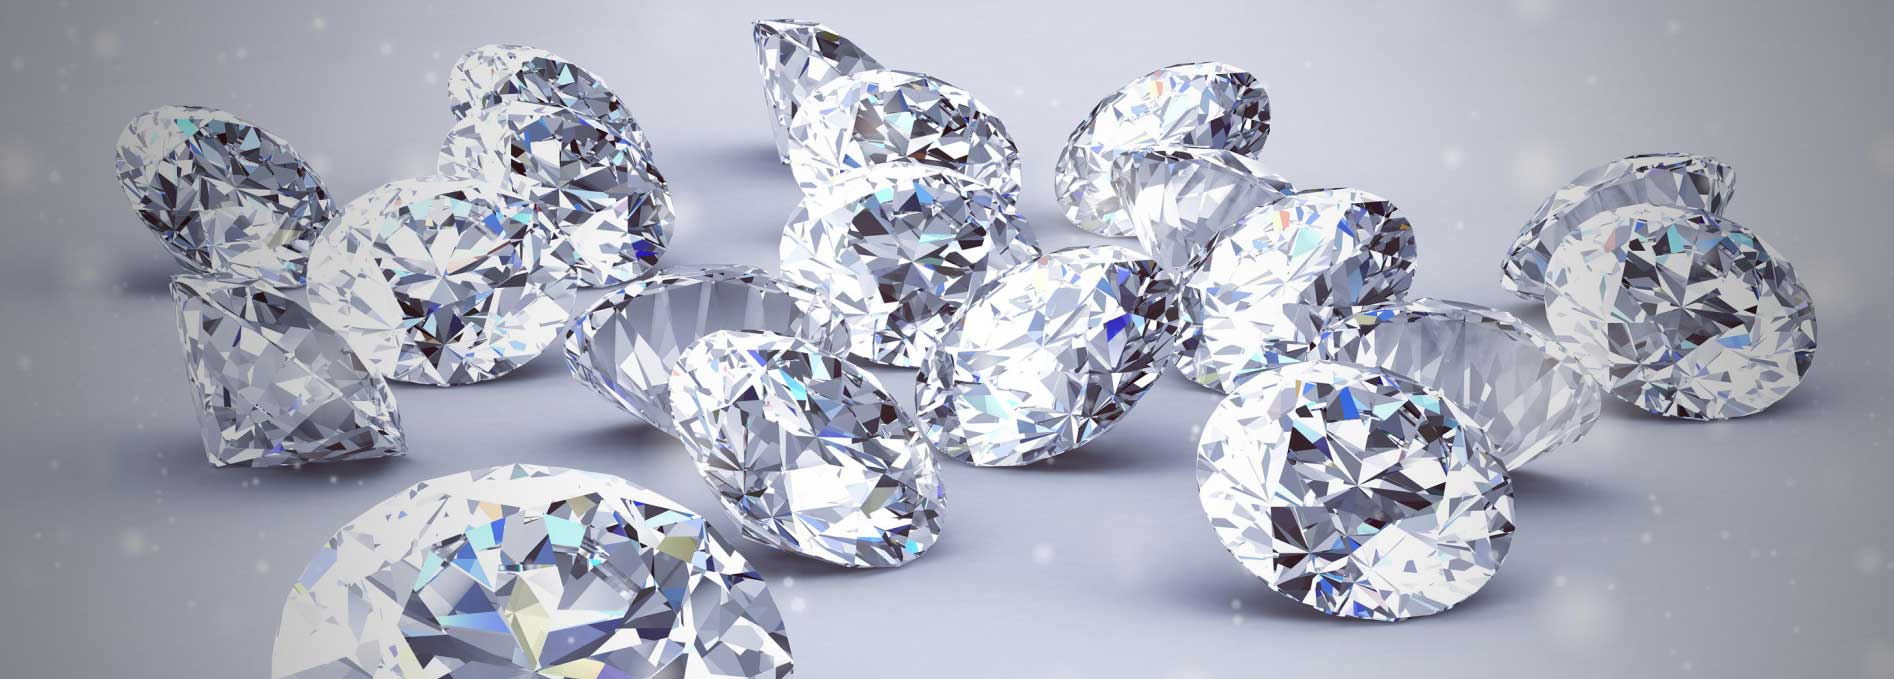 Royale Diamonds, Near Telephone Exchange, Bajirao Road, Pune | Diamond Jewellery  Manufacturer 